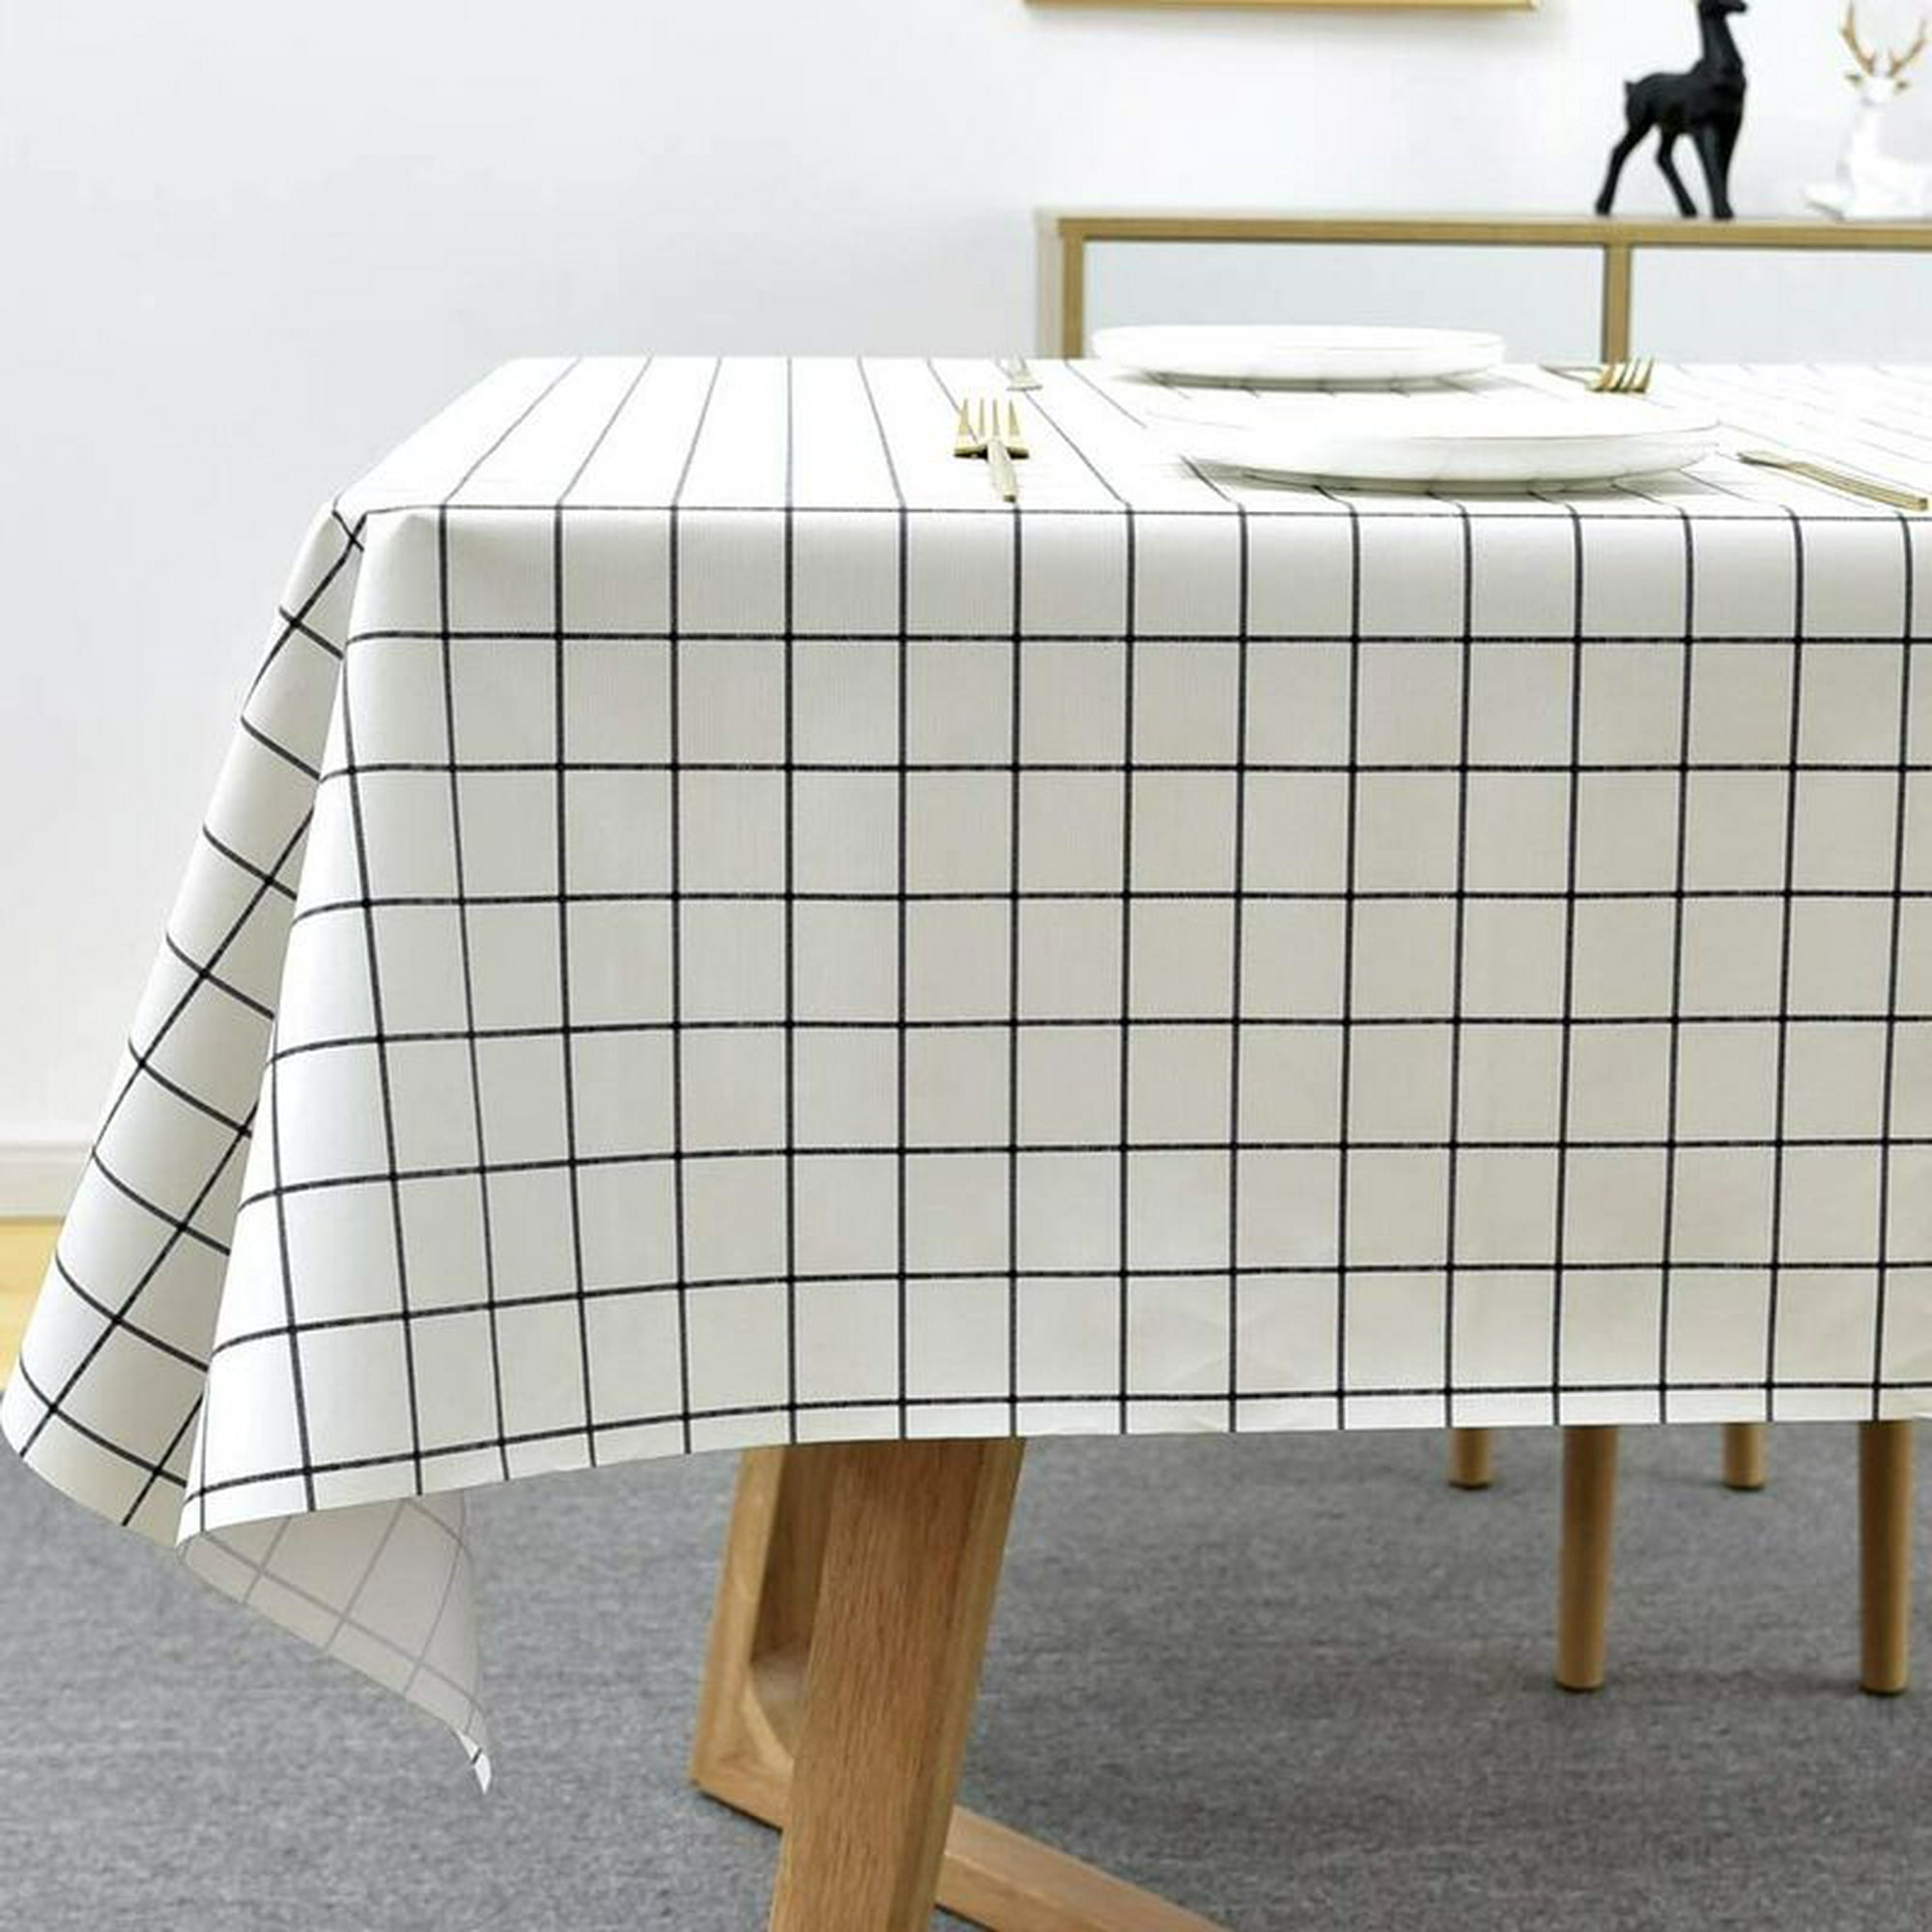  Mantel rectangular de PVC, protector de mesa, de